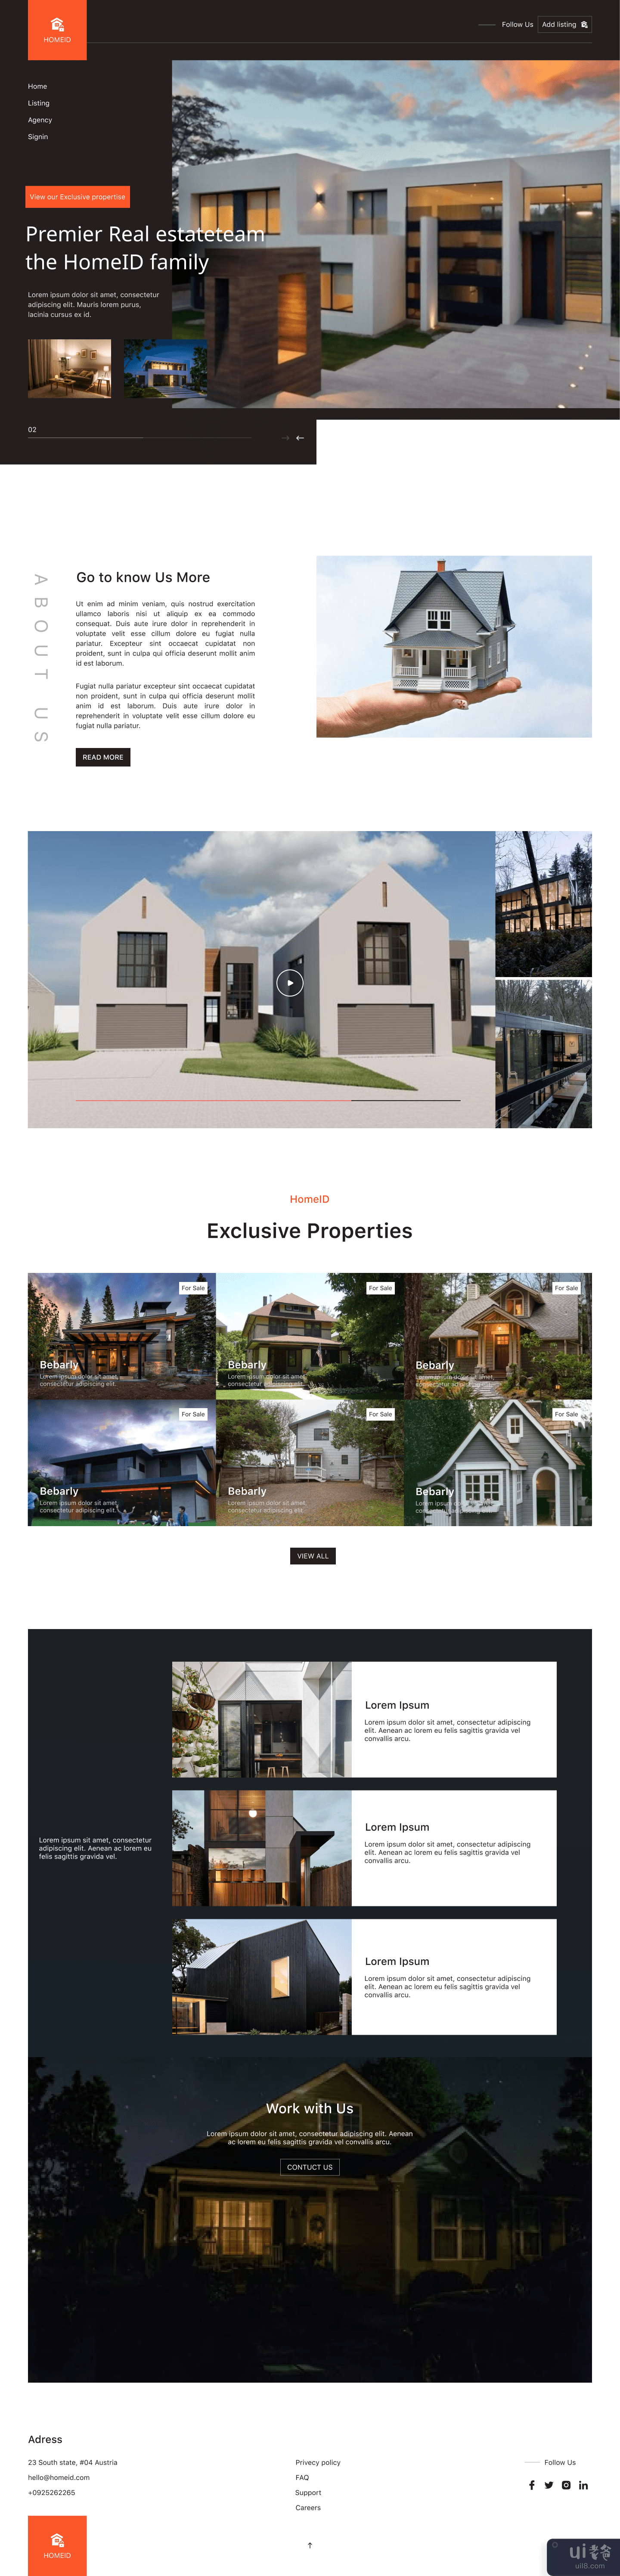 房地产网站(Real Estate Website)插图